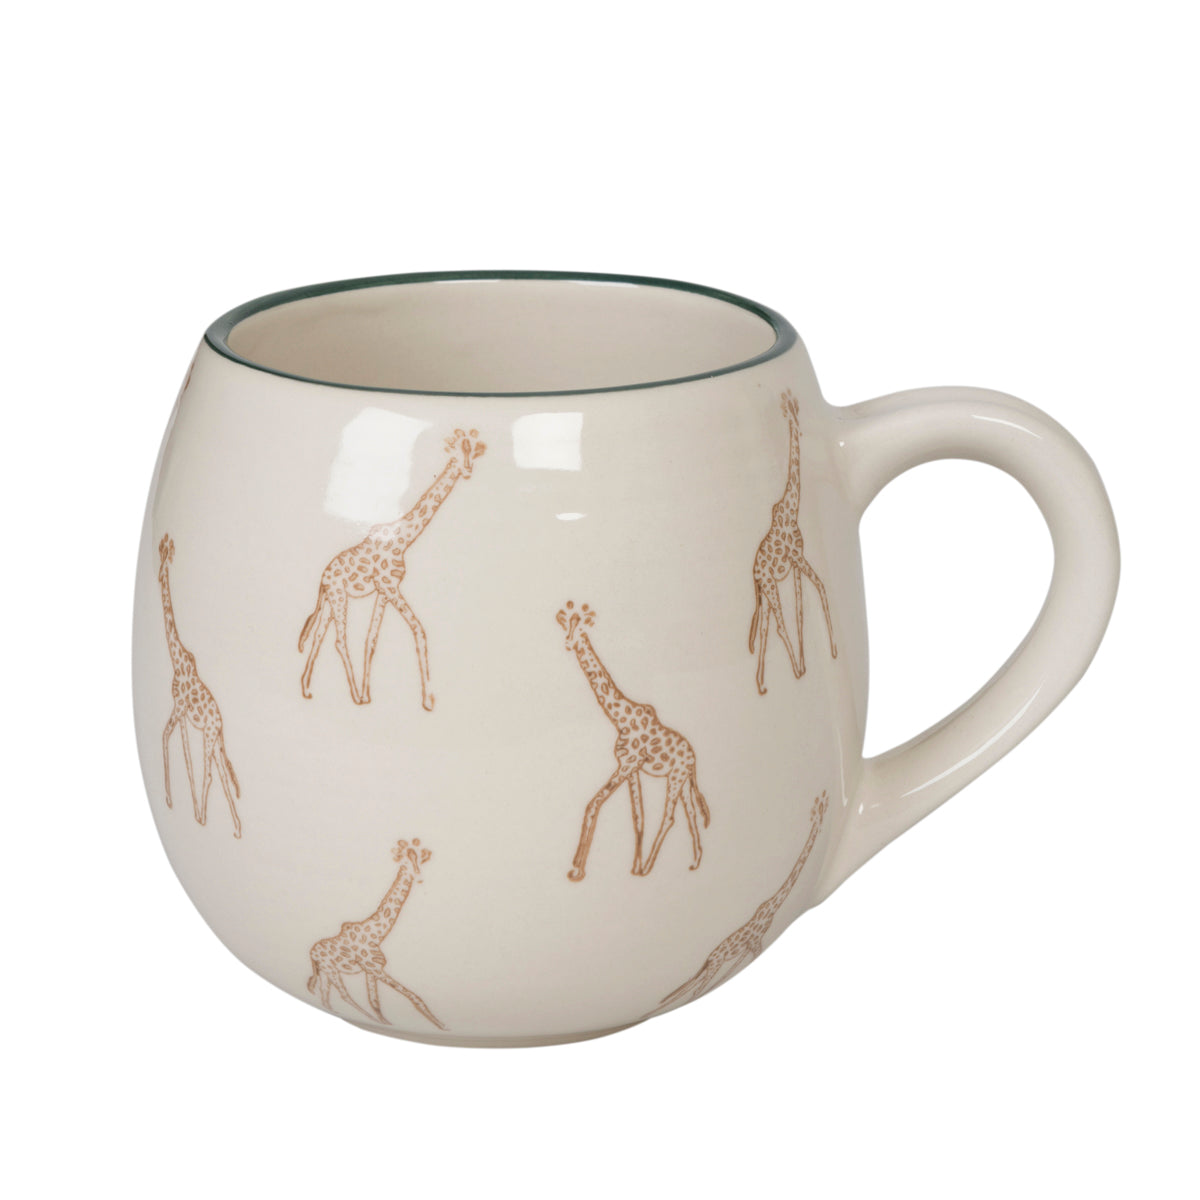 Giraffe Stoneware Mug by Sophie Allport